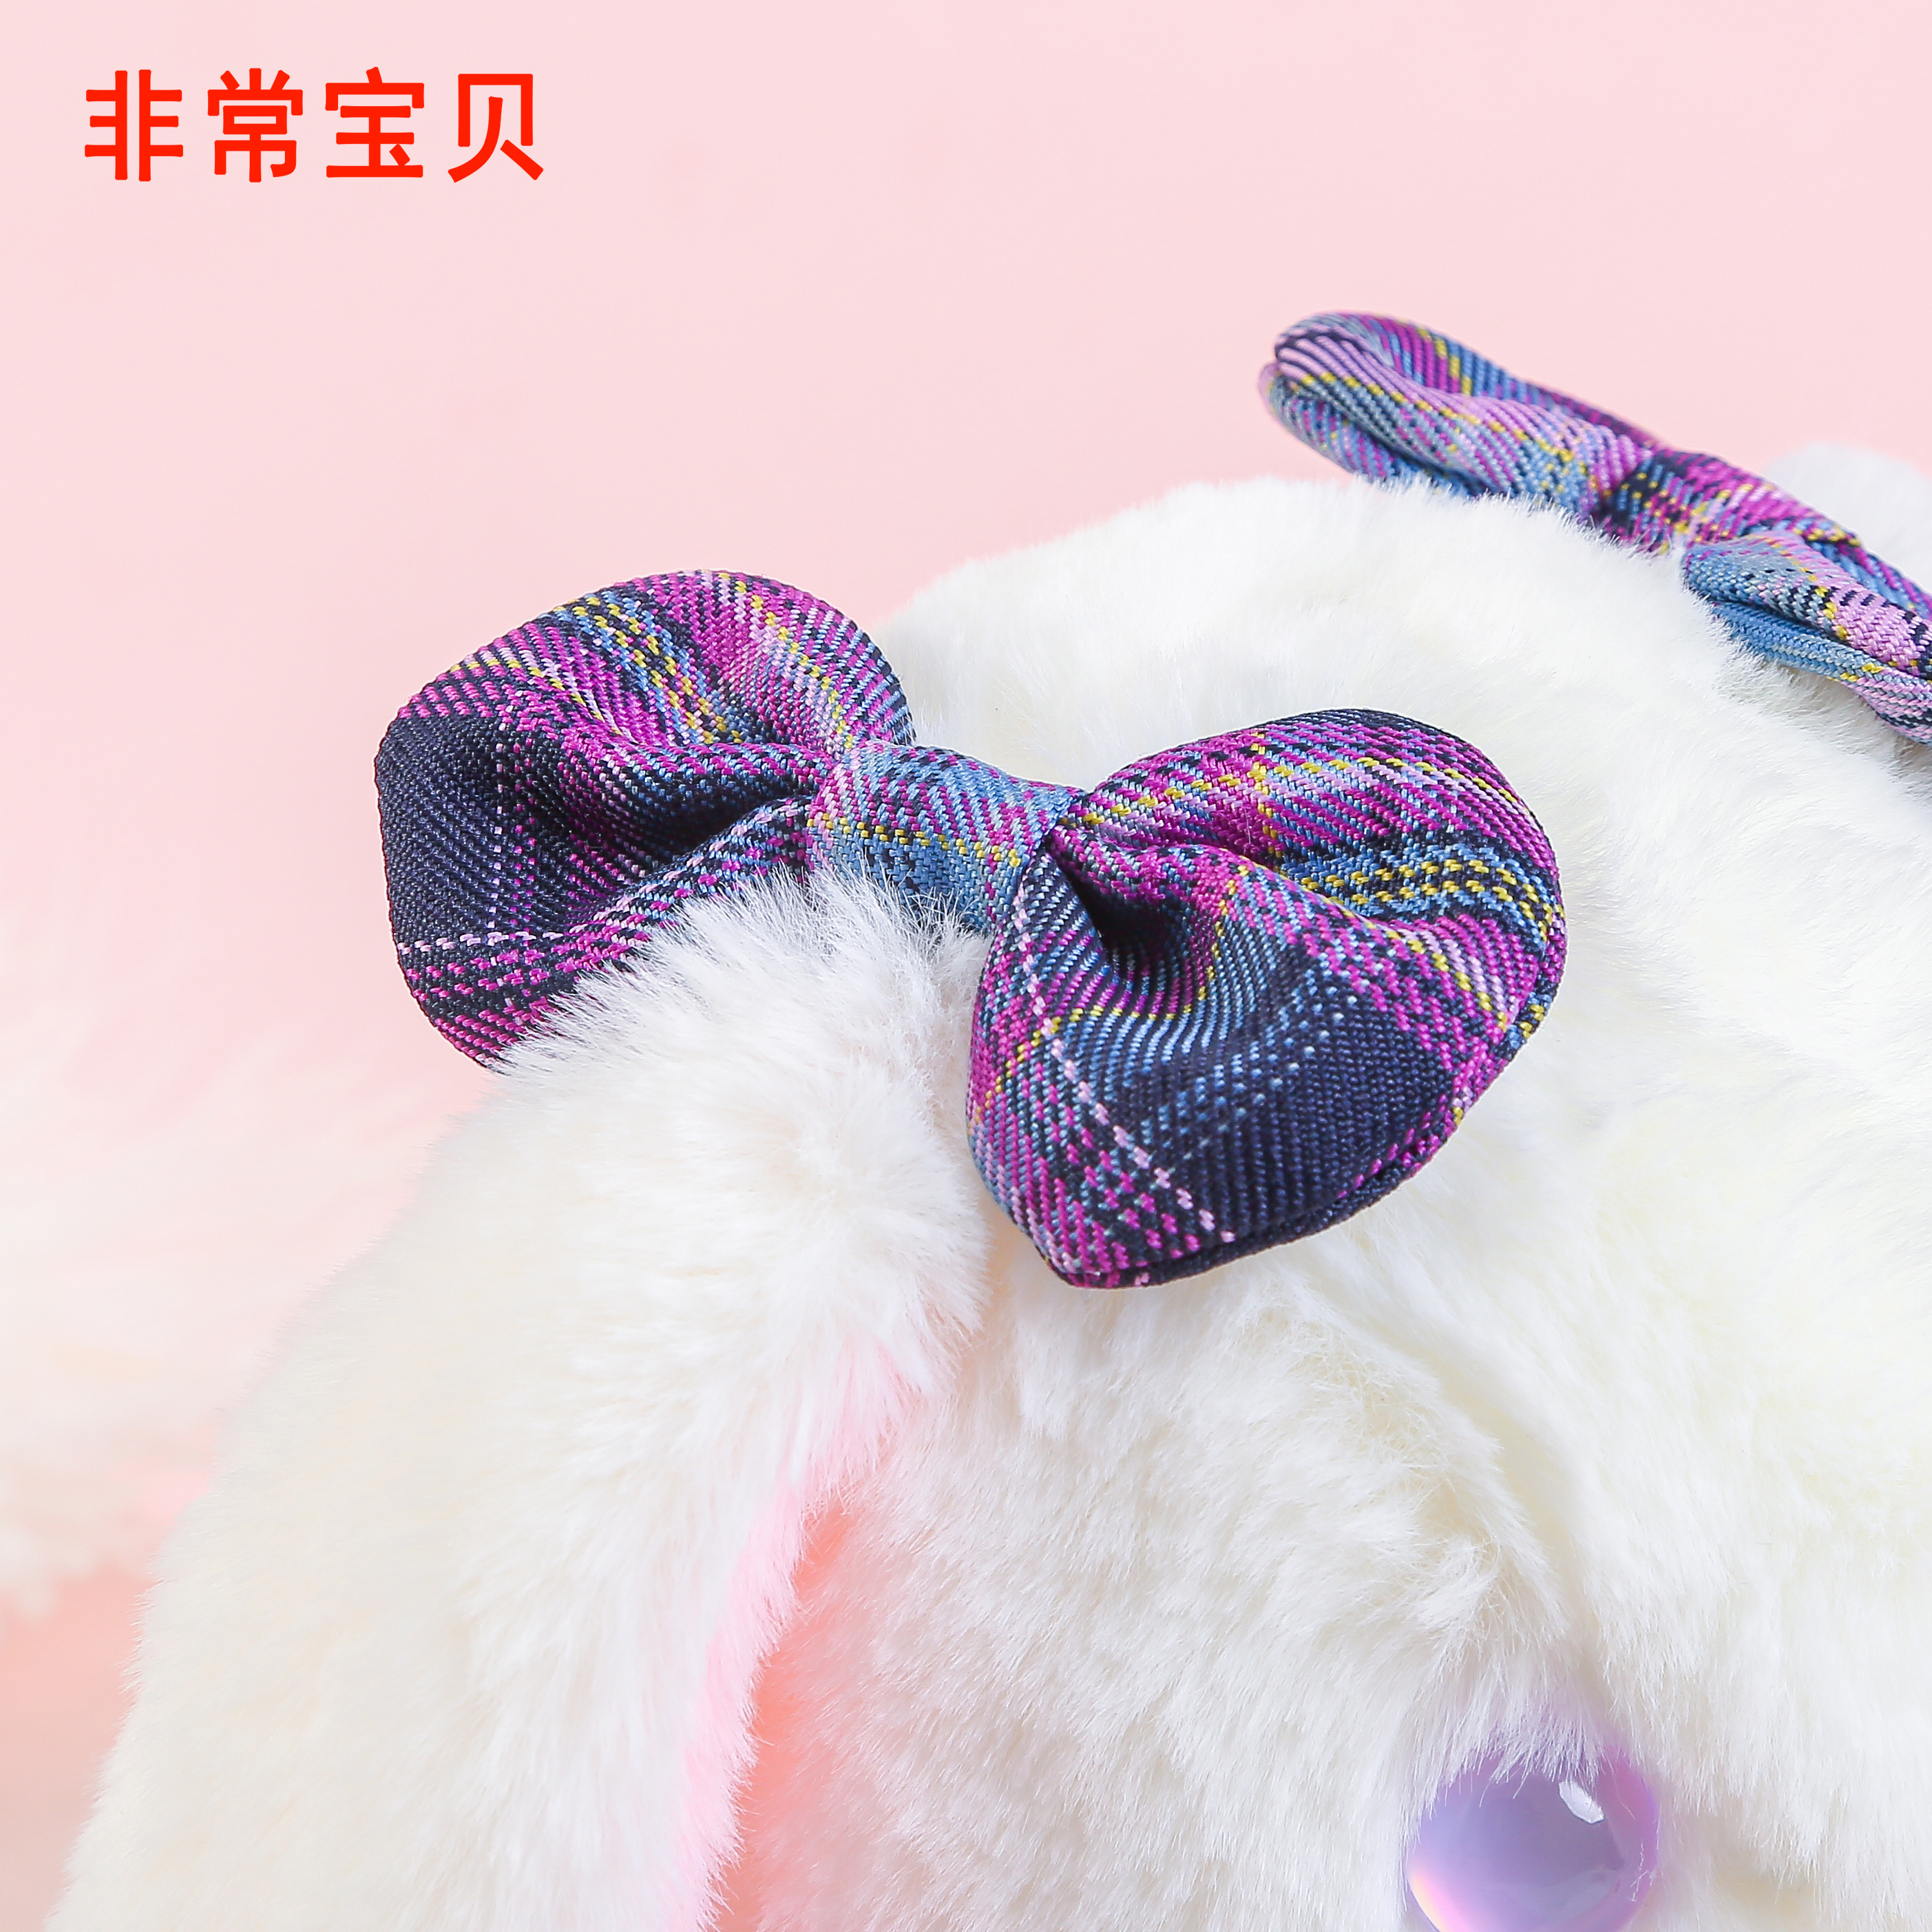 20cmjk紫色兔非常宝贝毛绒玩具布娃娃玩偶抱枕婚庆礼品生日礼物详情图4